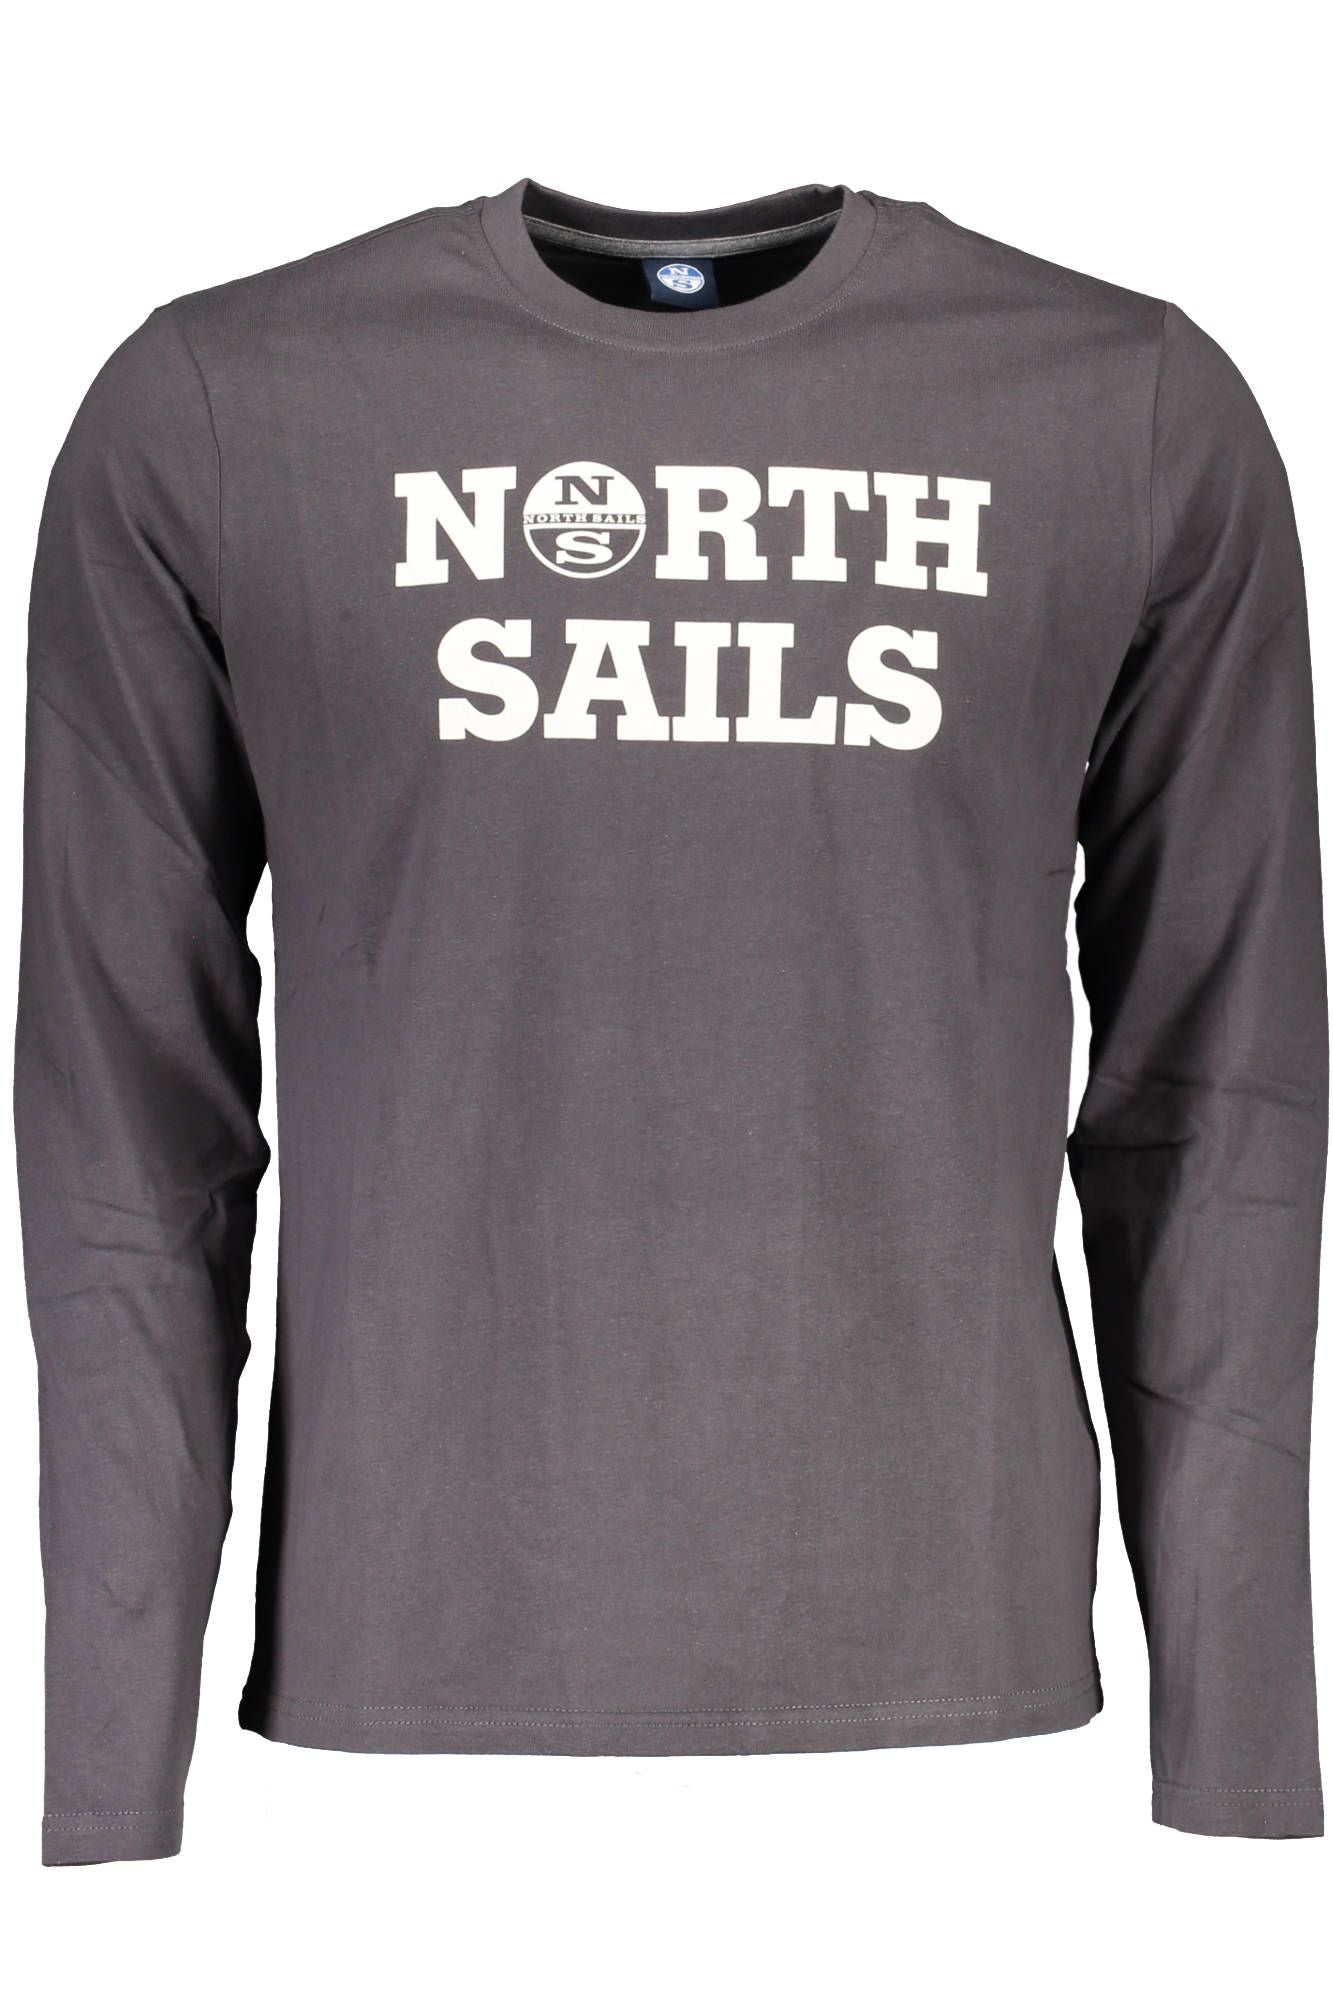 North Sails Elegant Gray Long-Sleeve Cotton Tee